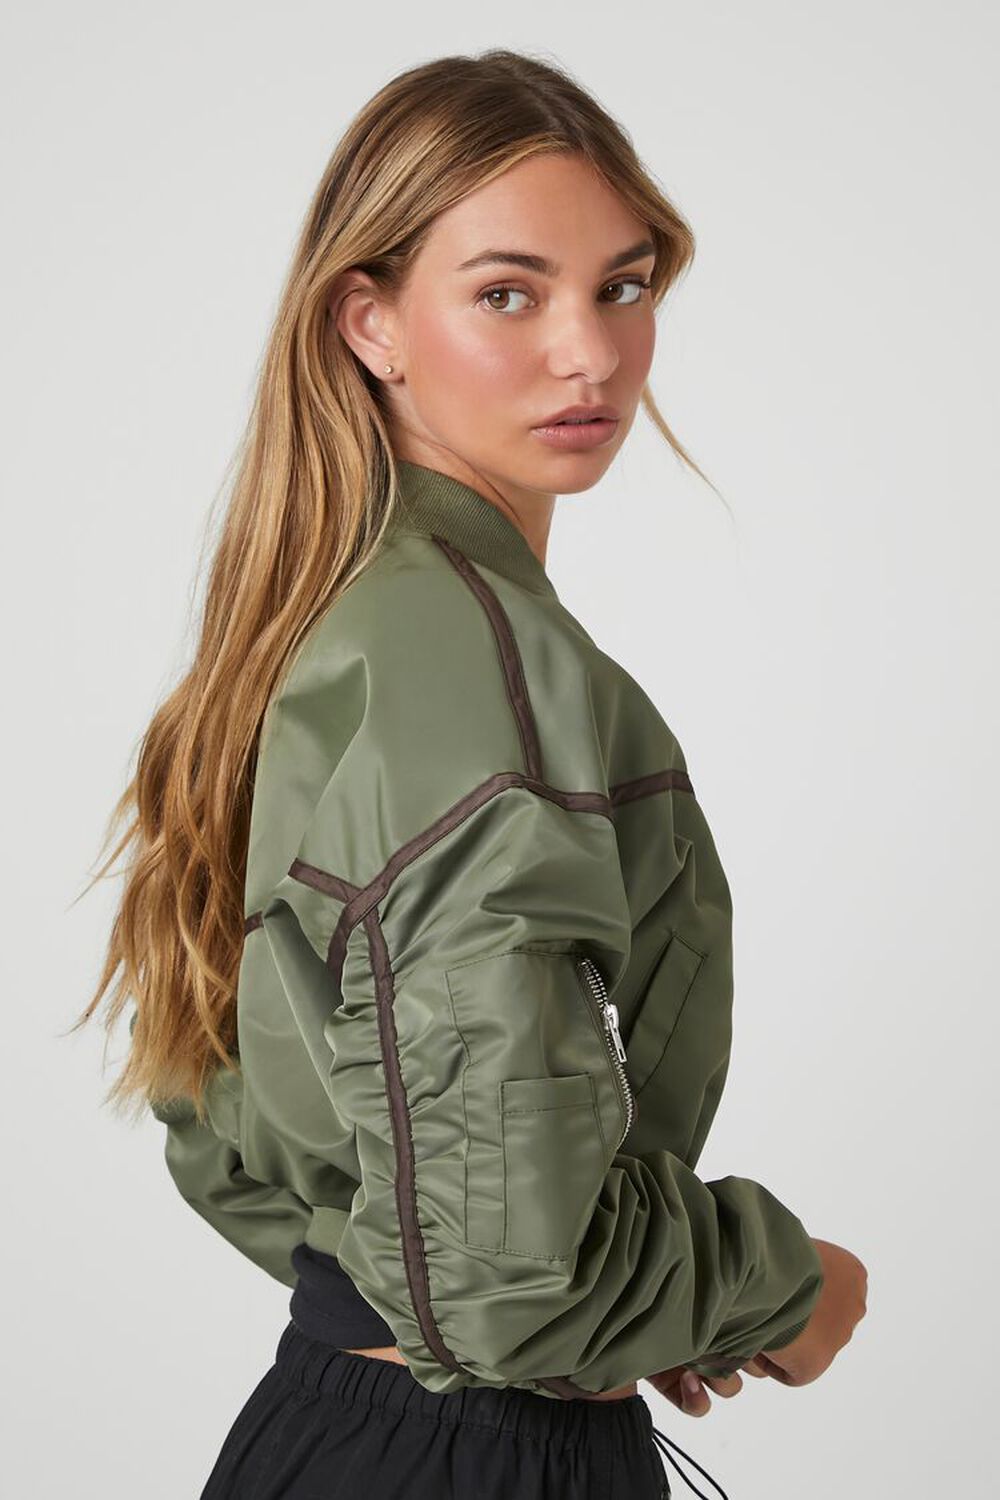 Scoop Women's Cropped Bomber Jacket